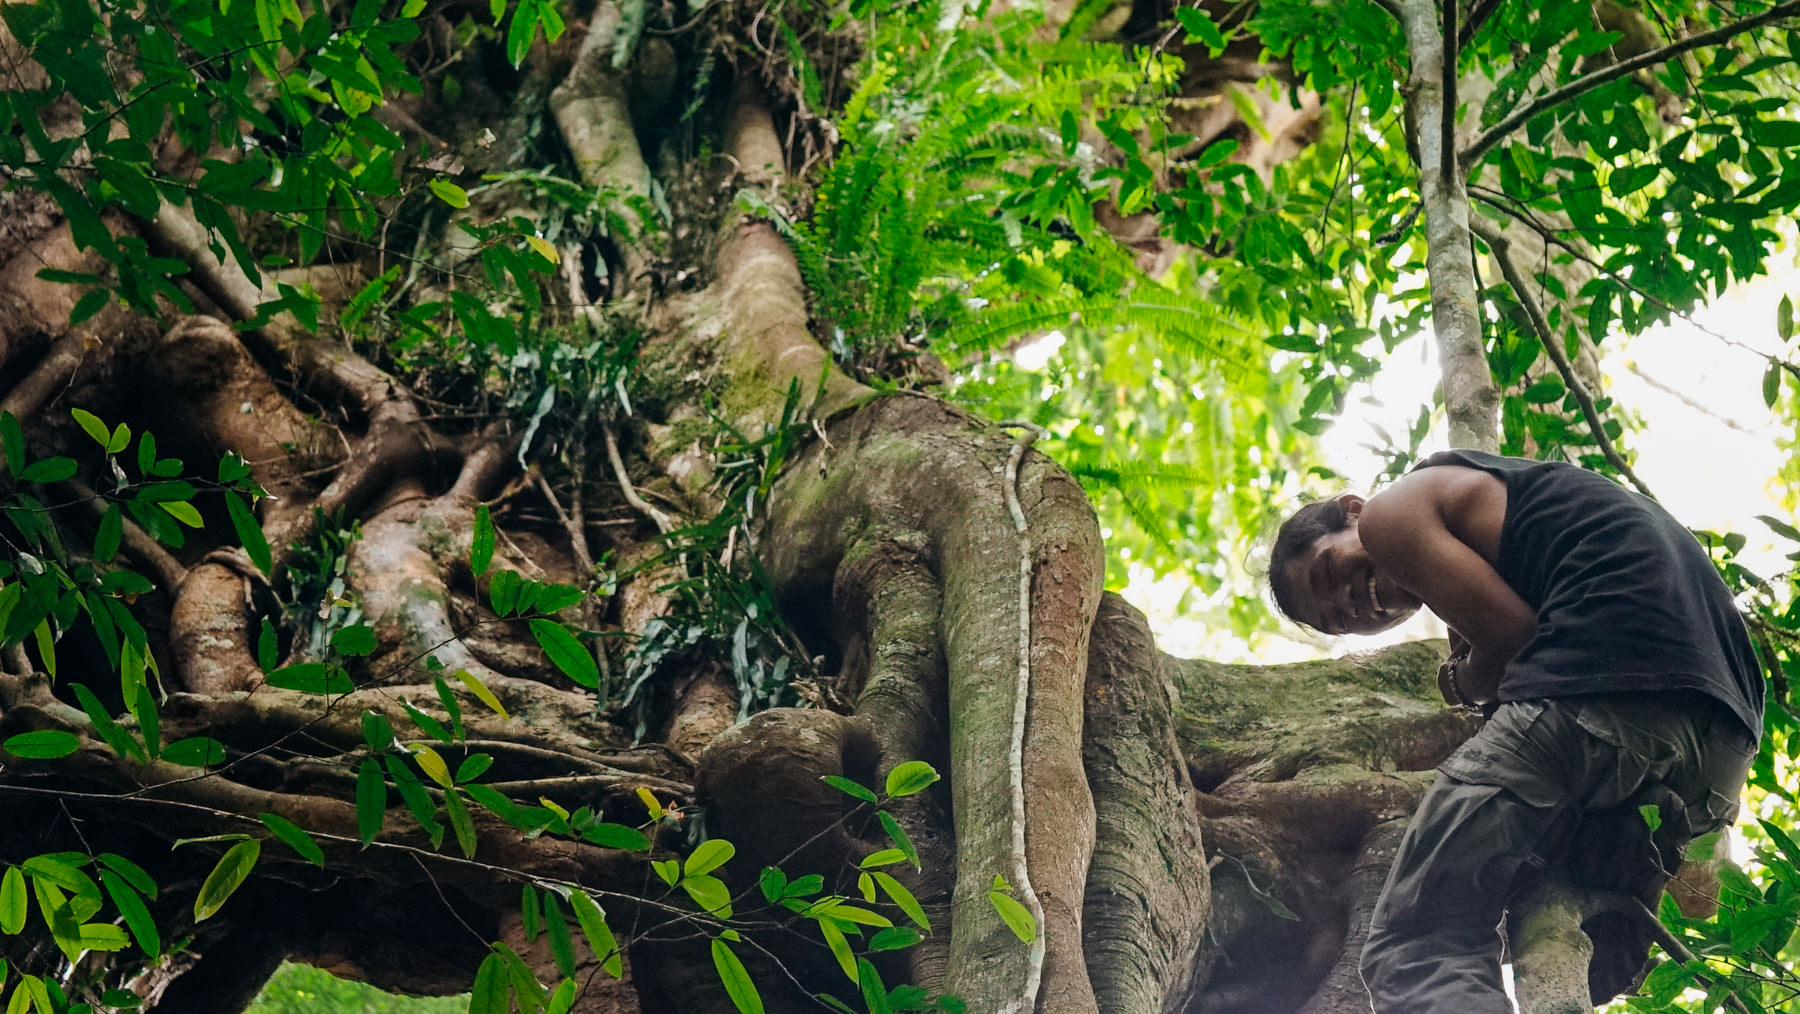 Safar Ketambe climbs a giant tree in the jungle